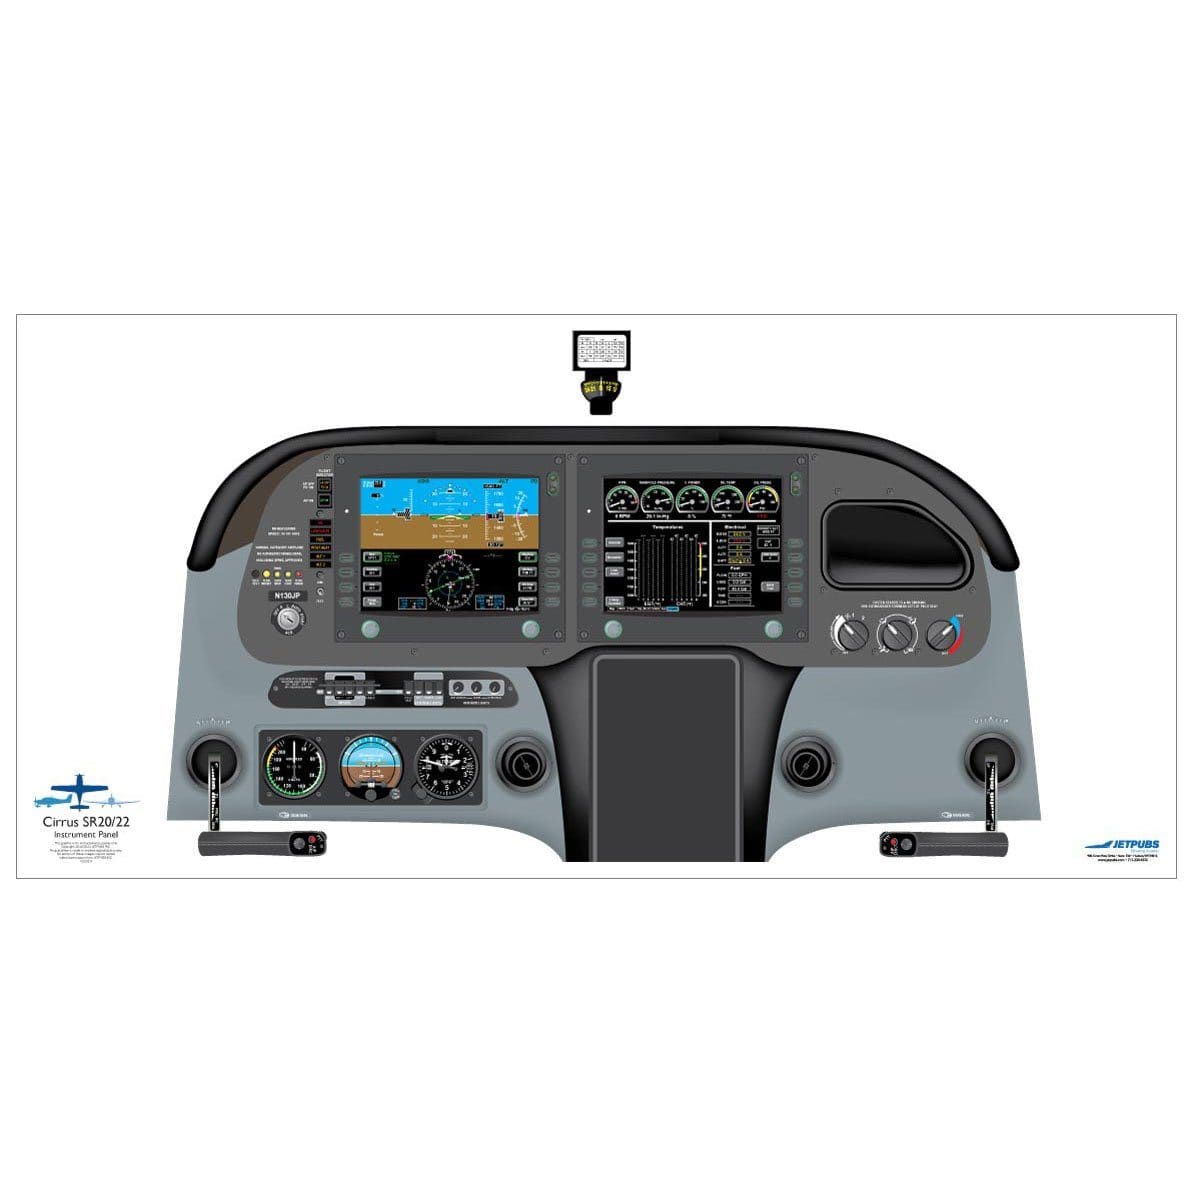 Cirrus 18" x 36" Cockpit Posters - PilotMall.com